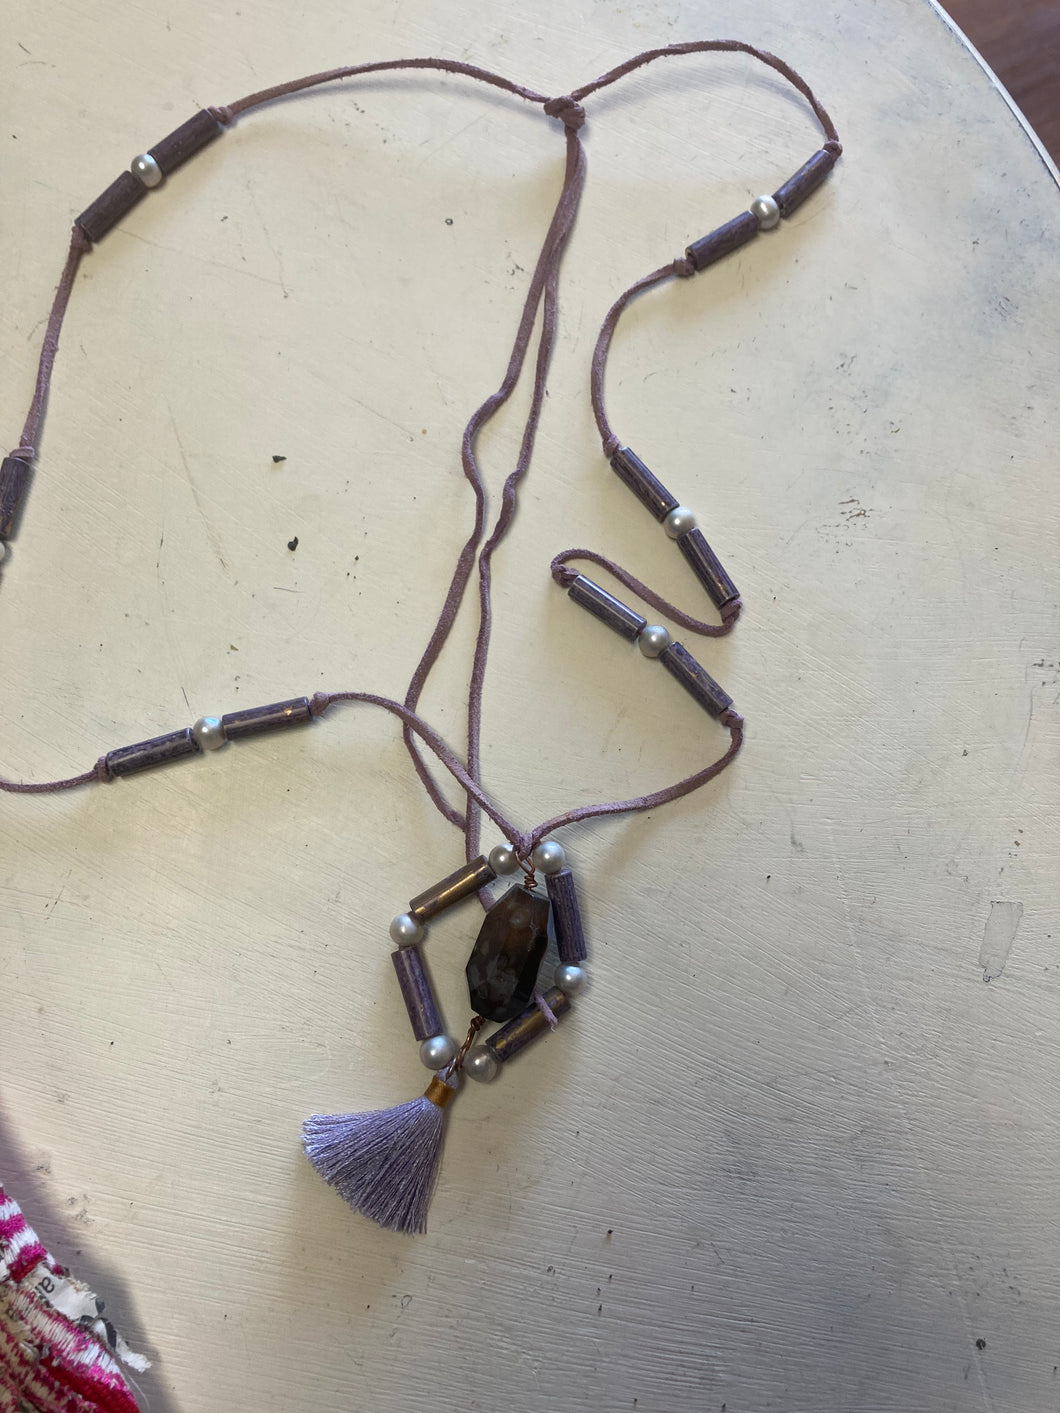 Plastic bead pendant necklace with purple tassel and pendant